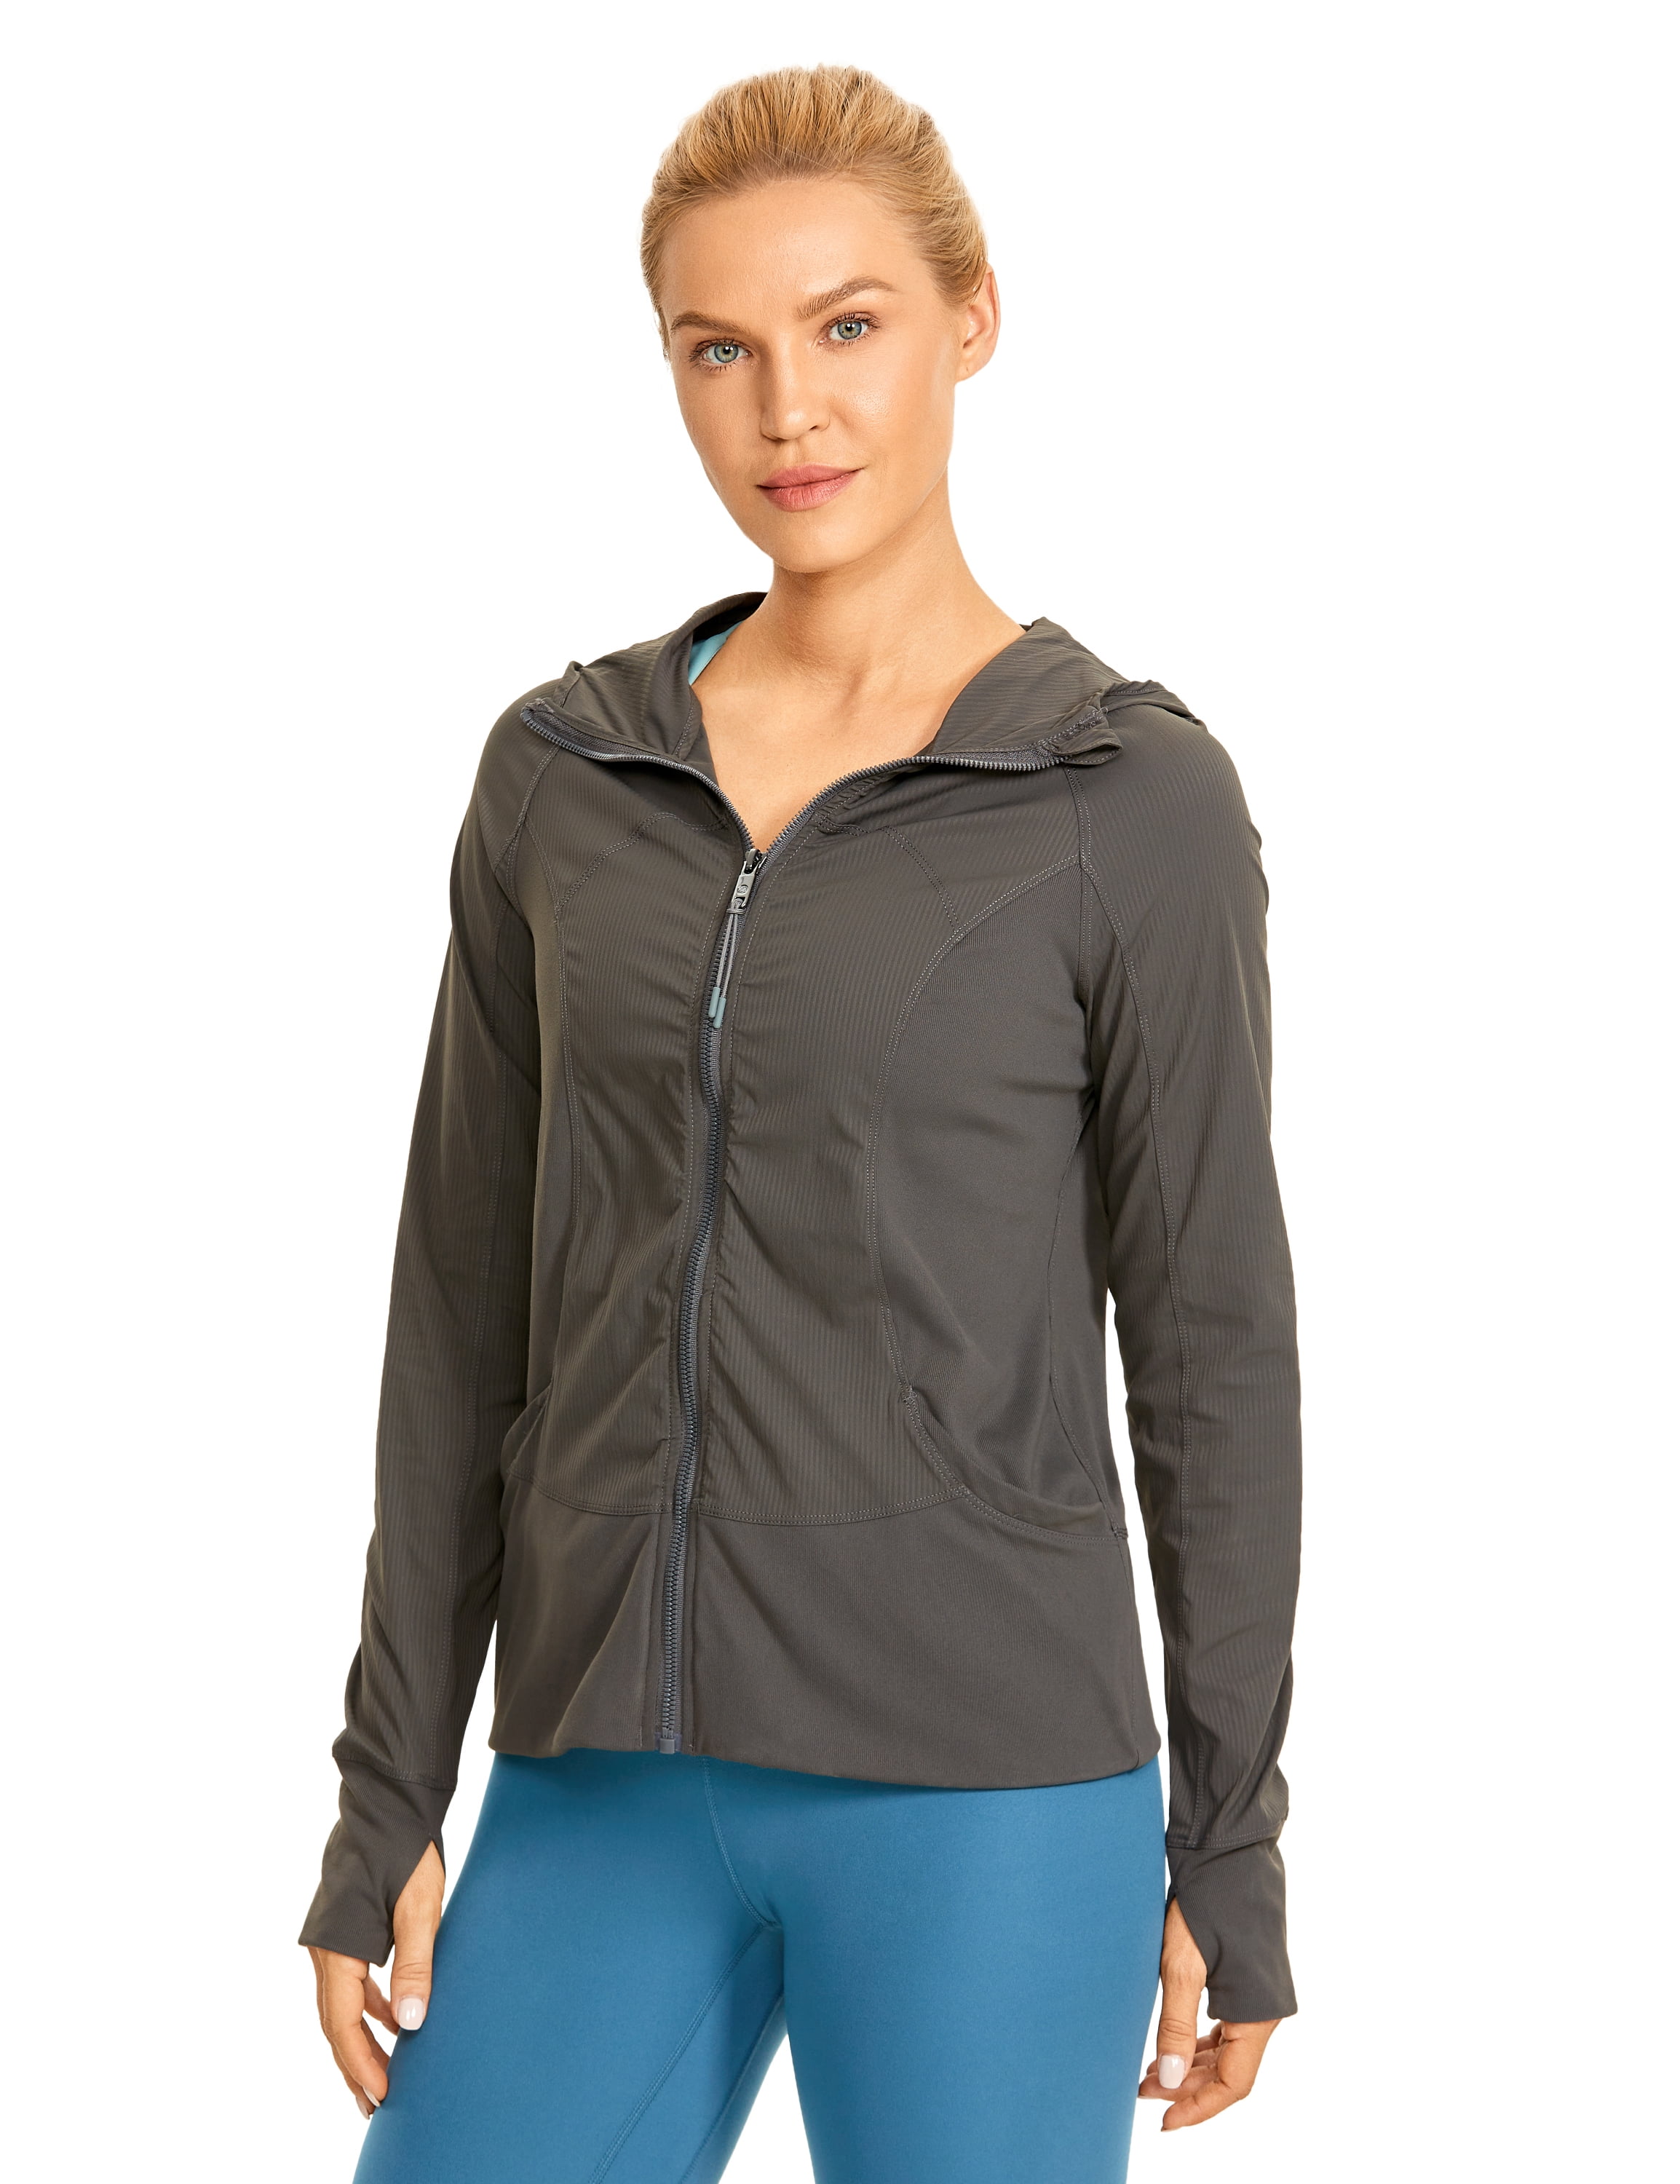 CRZ YOGA Women's Lightweight Breathable Athletic Jackets Full Zip Sweatshirt Running Hoodies with Pockets 